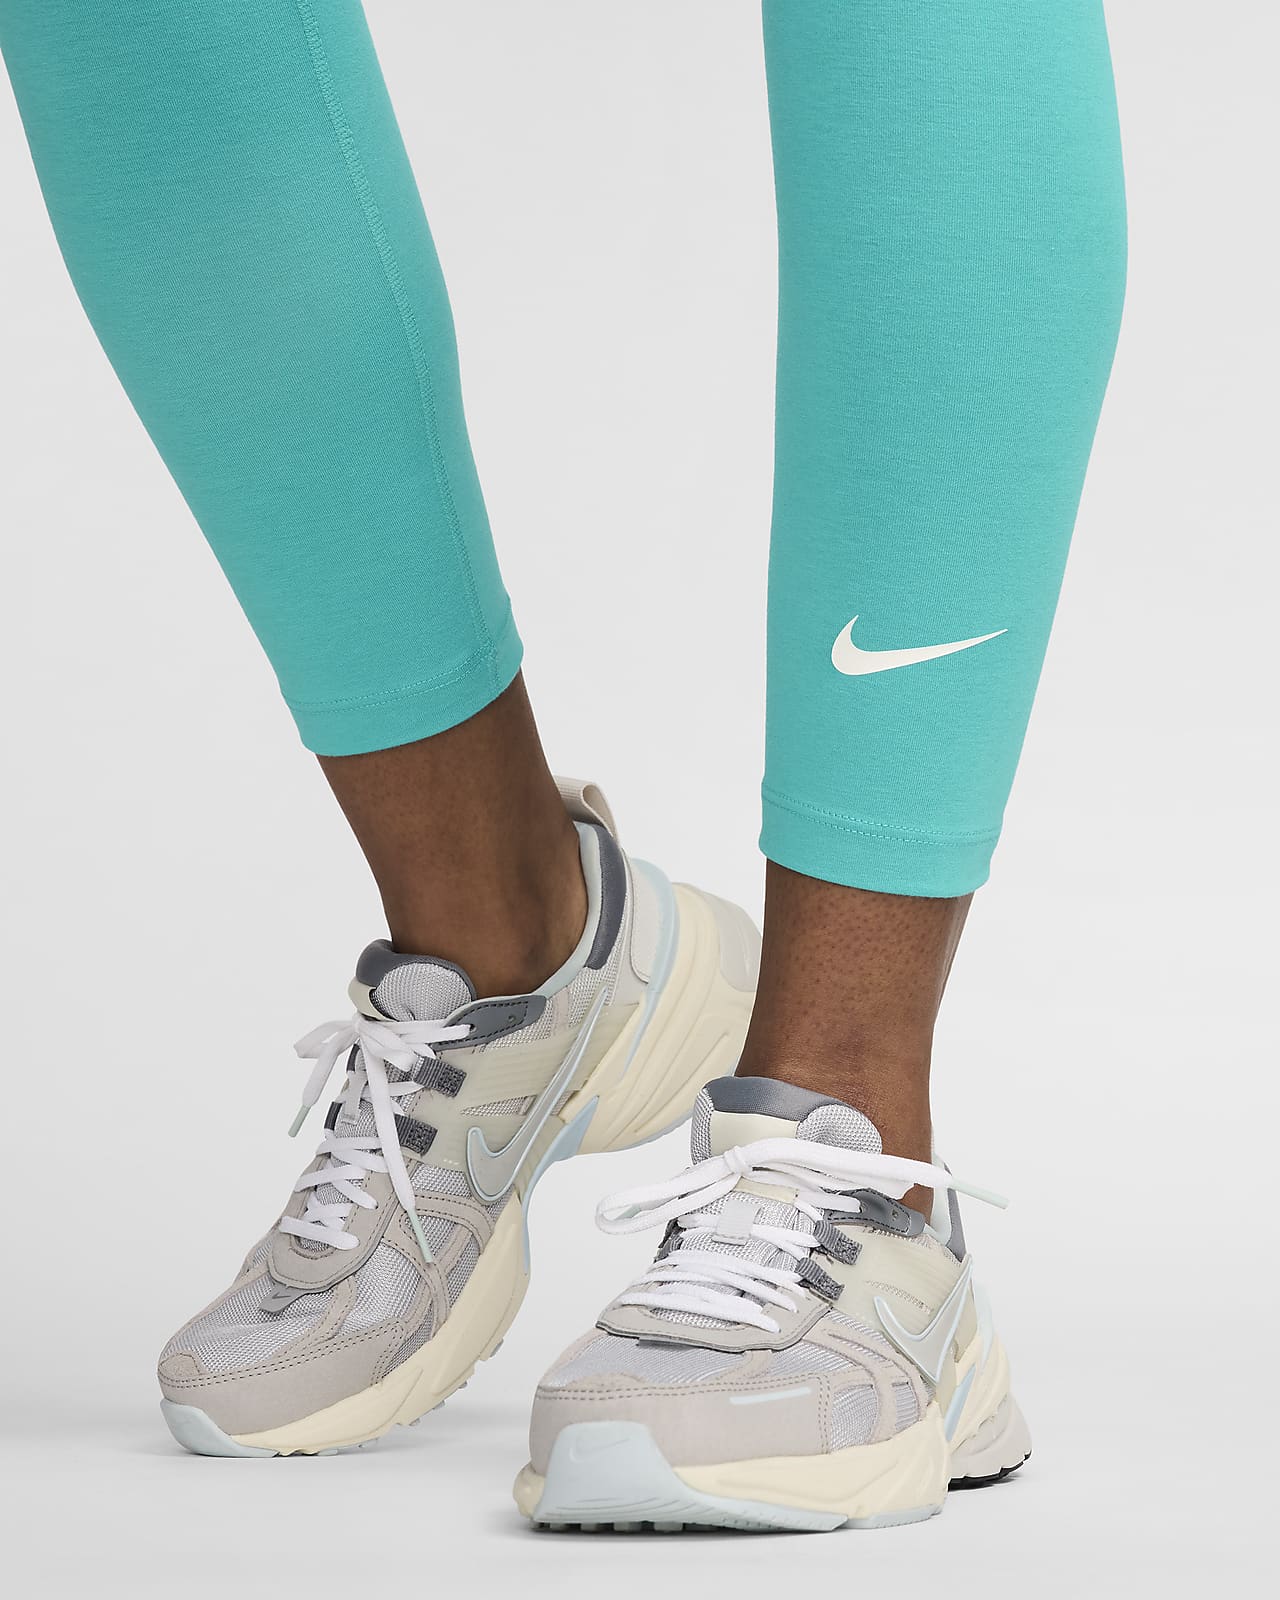 Nike Sportswear Classic Women's High-Waisted 7/8 Leggings